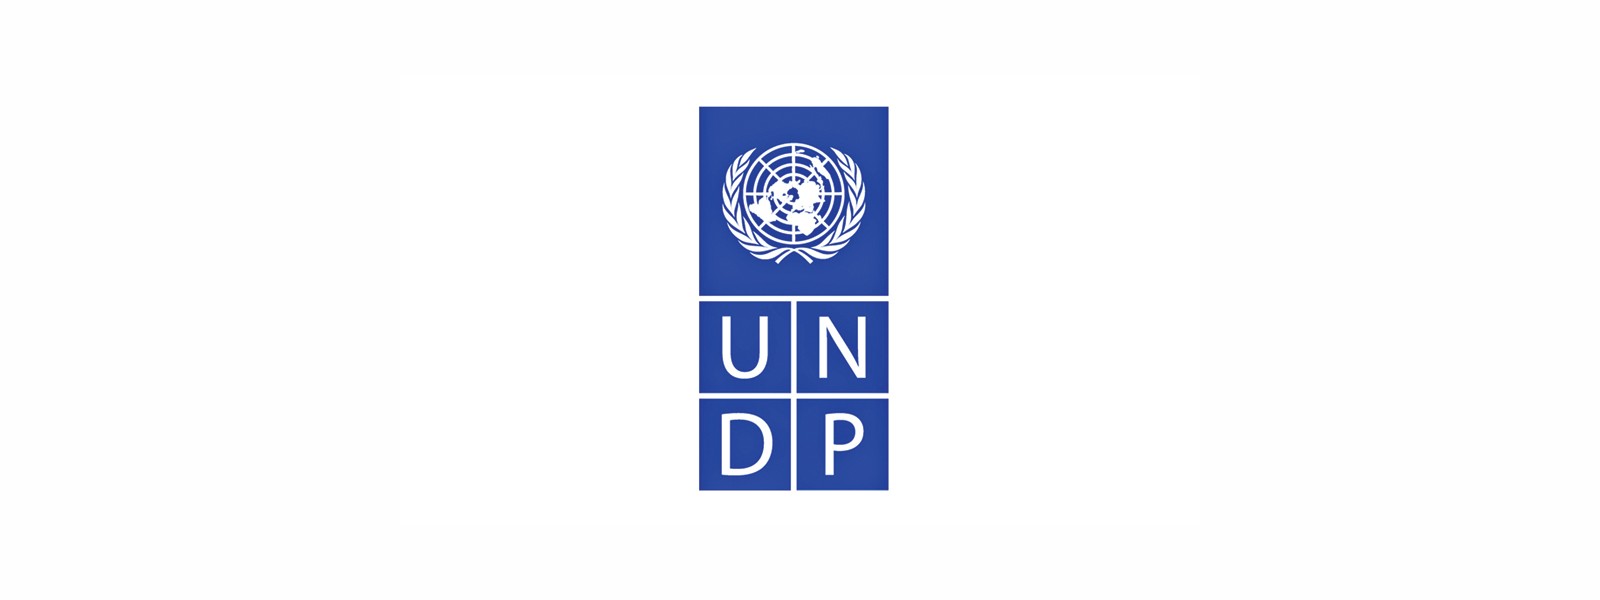 SL ranked “High Human Development” in recent UNDP report